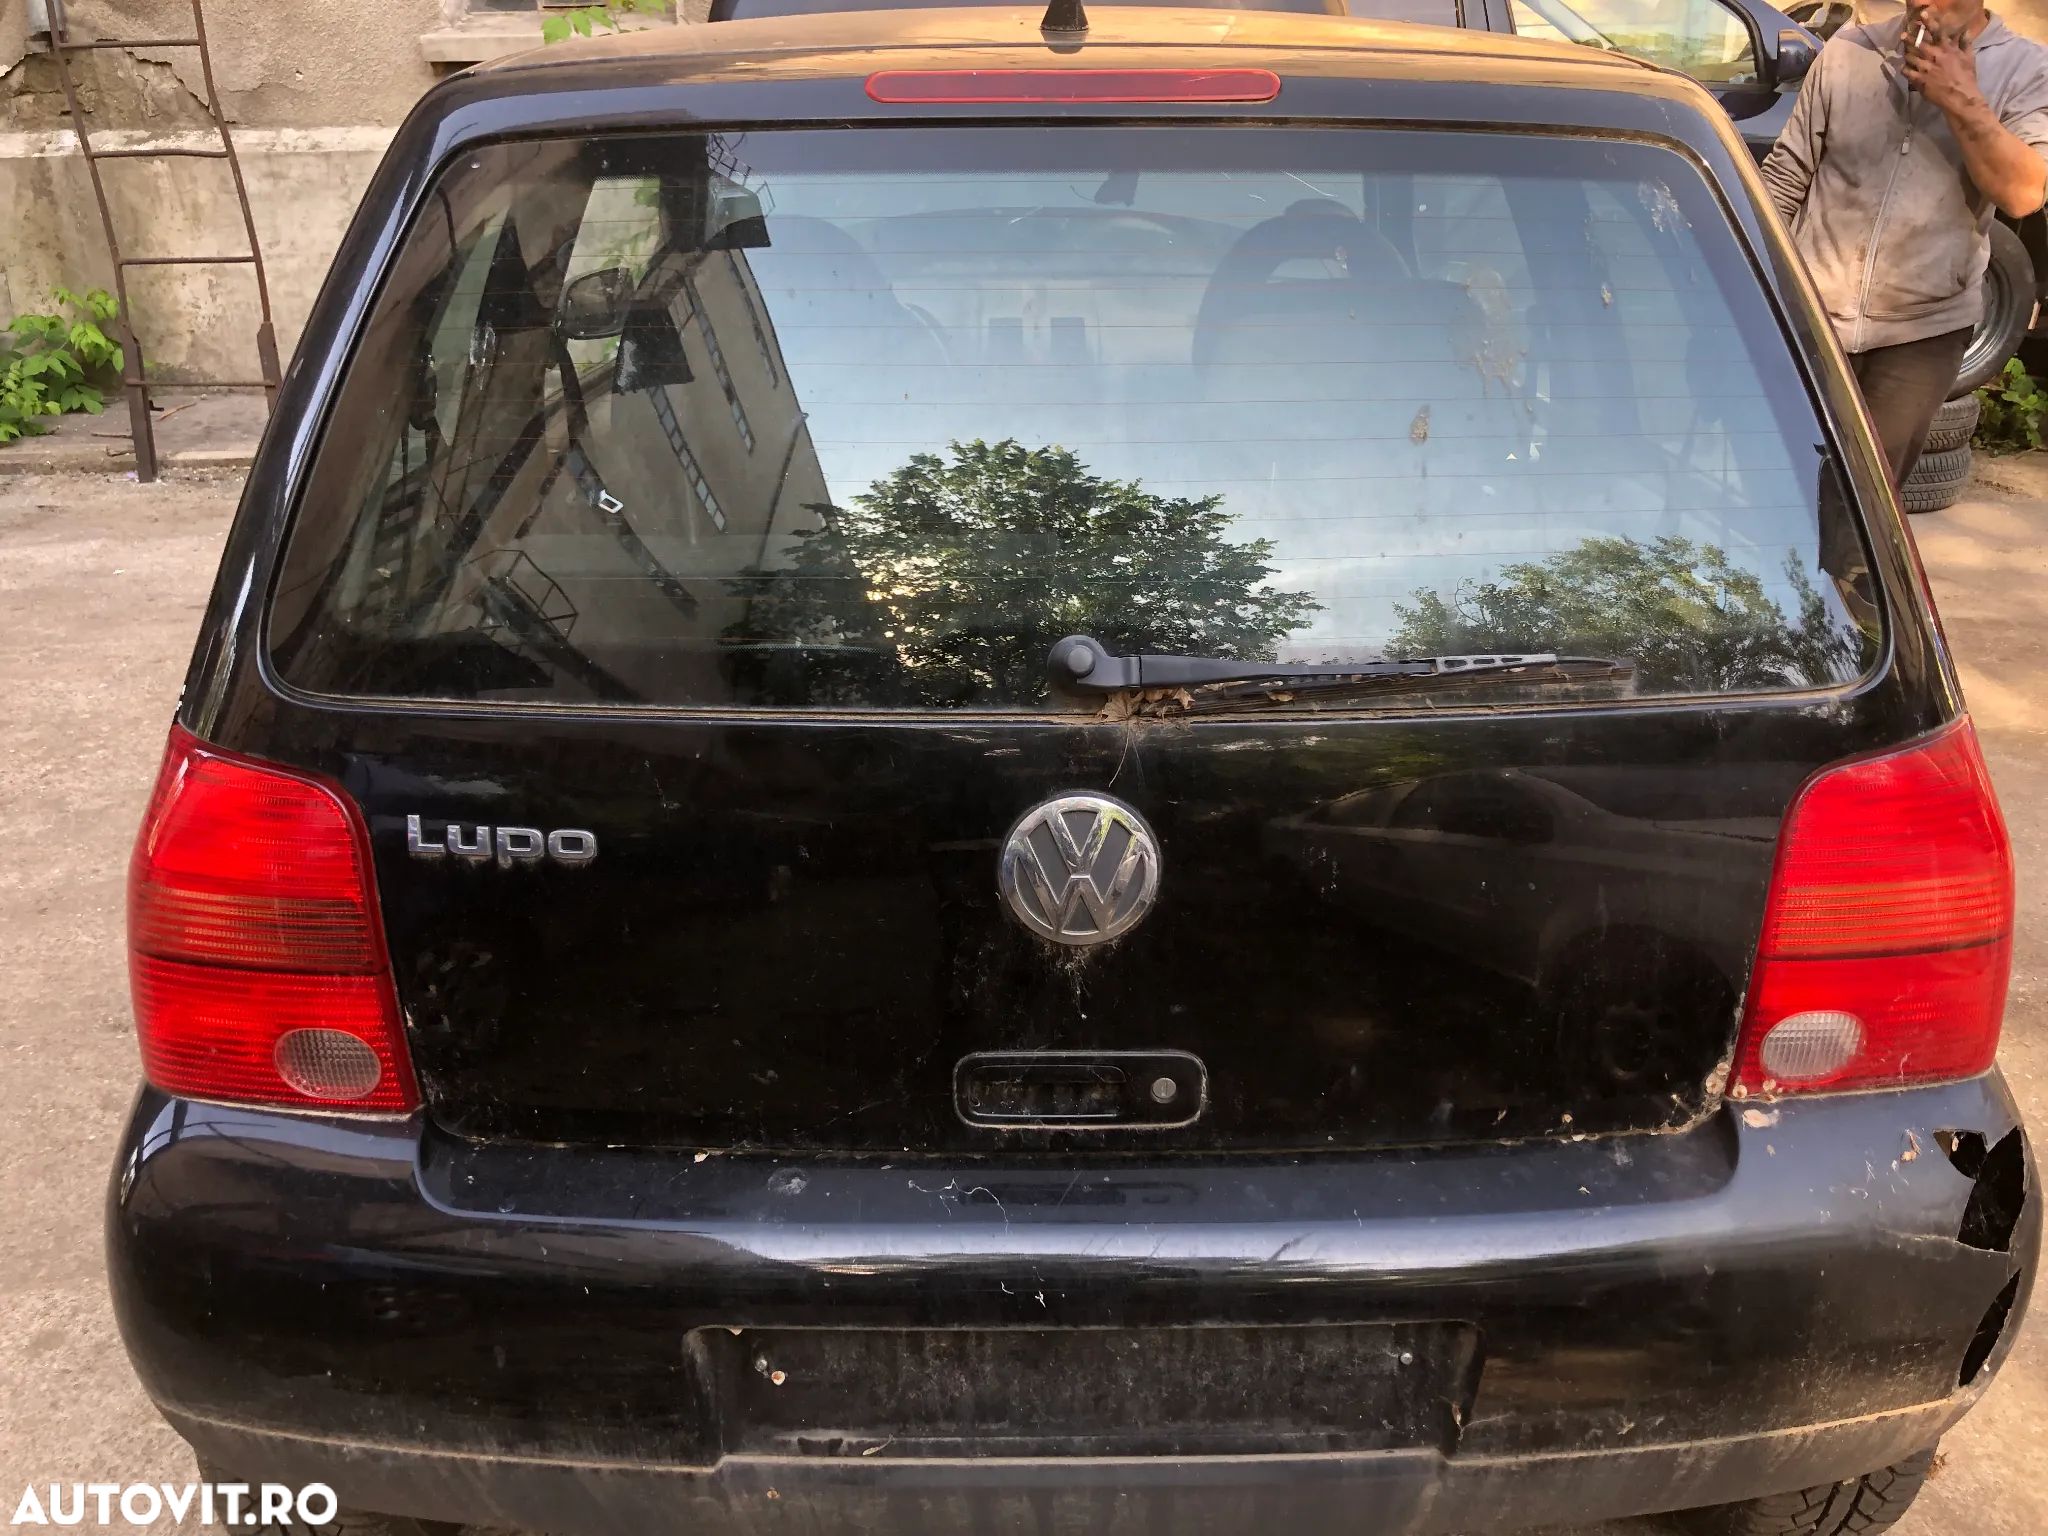 Haion spate cu luneta Volkswagen Lupo negru 2001 - 1